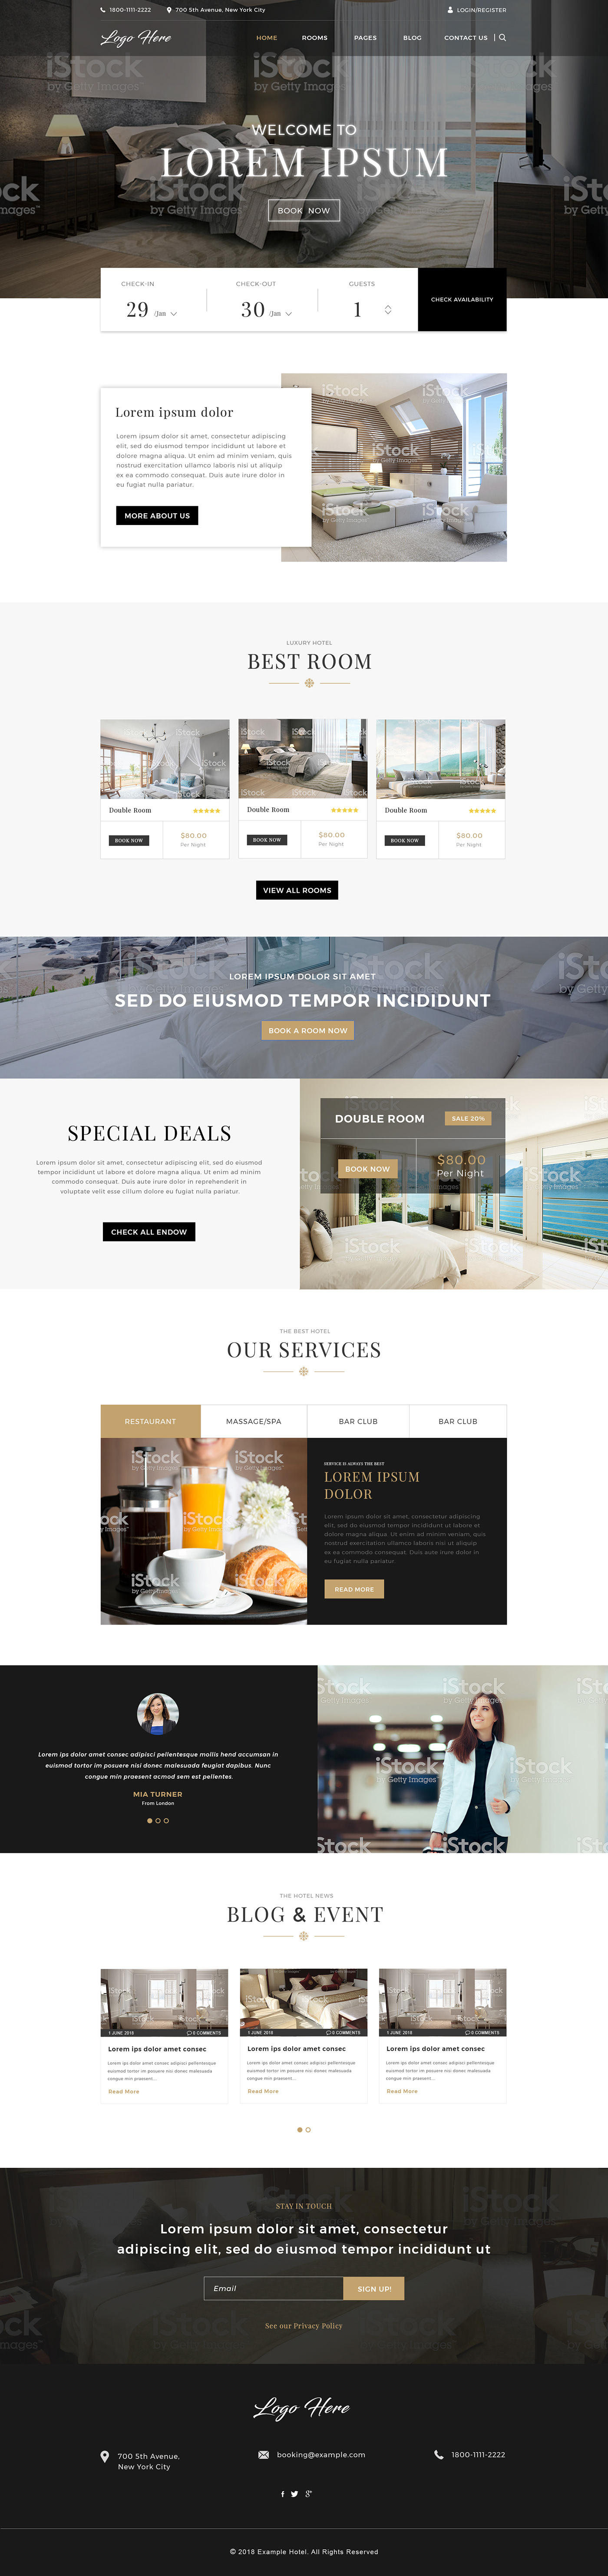 desing hotel design hotelwebsite minimalist Mockup modern